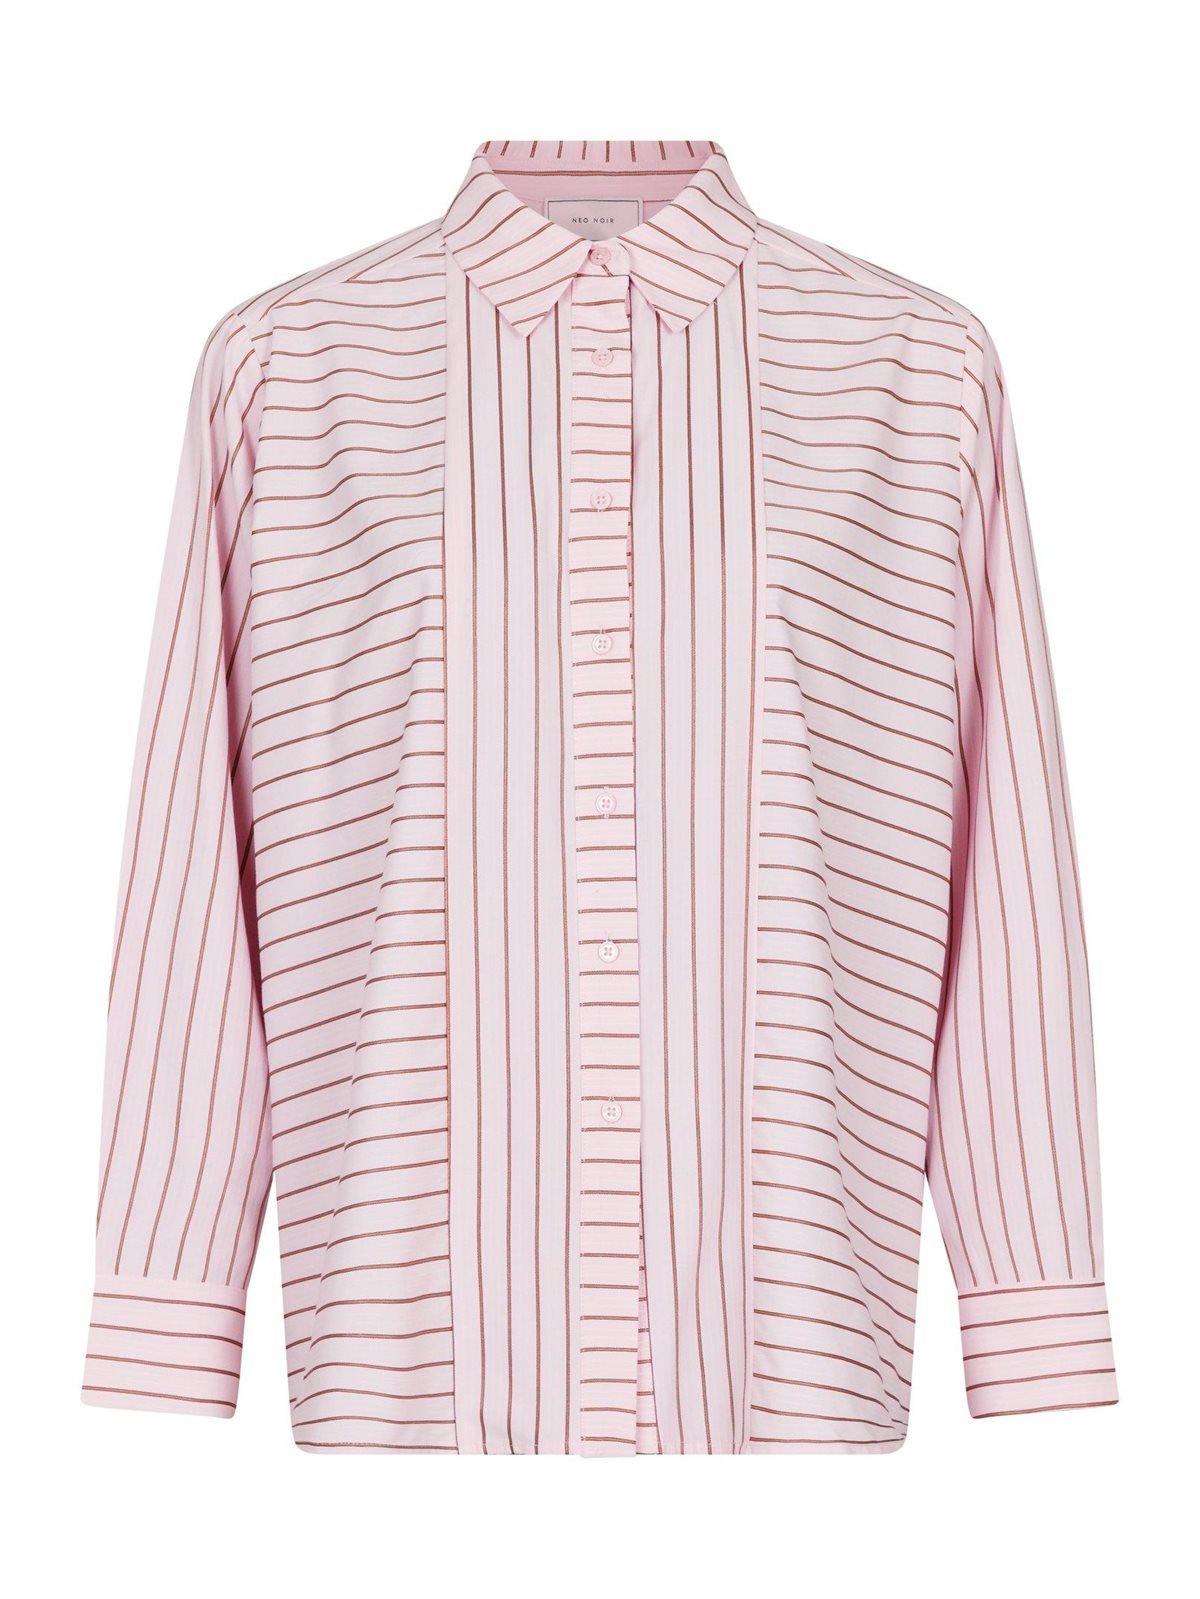 Neo Noir Gili Multi Stripe Shirt Light Pink